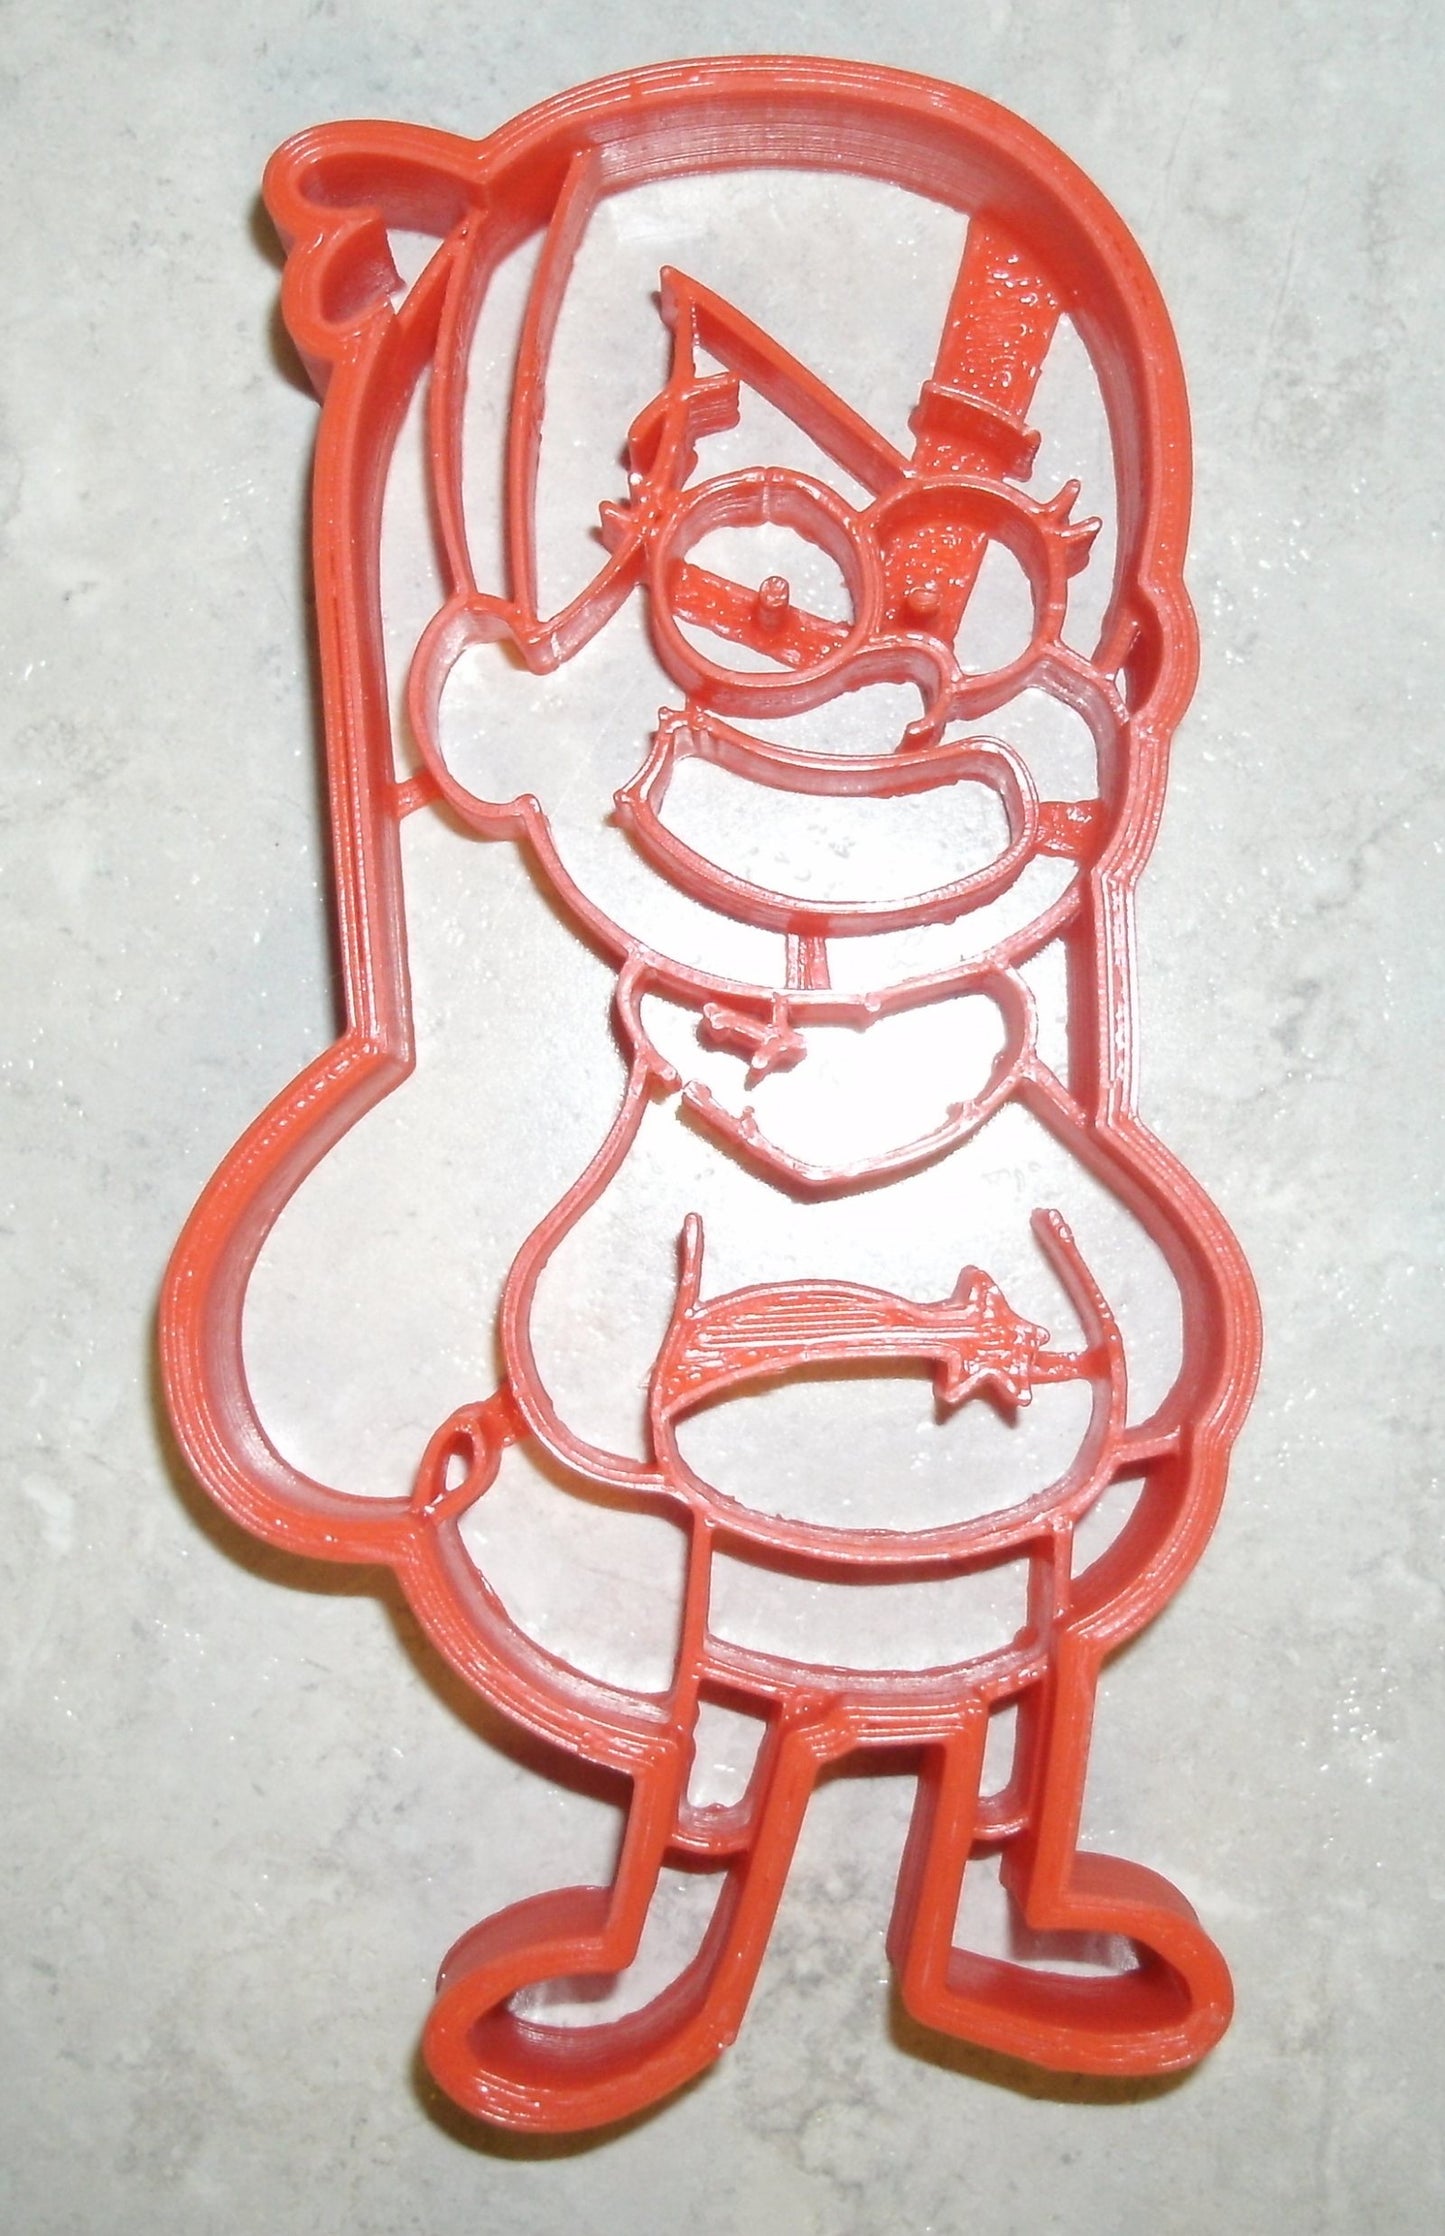 6x Mabel Pines Fondant Cutter Cupcake Topper Size 1.75" USA FD640